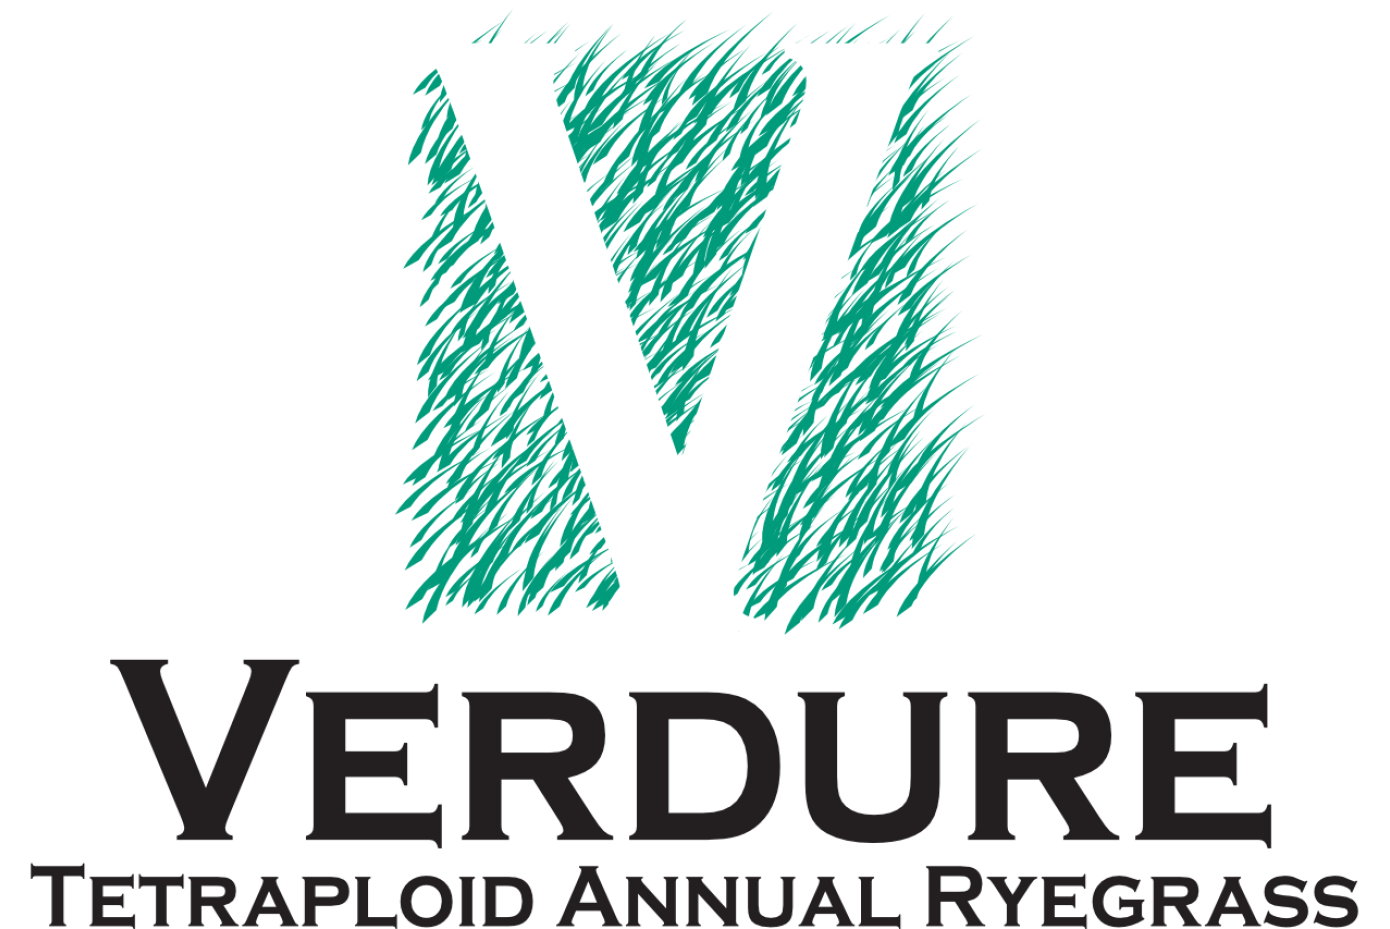 Verdure tetraploid annual ryegrass logo